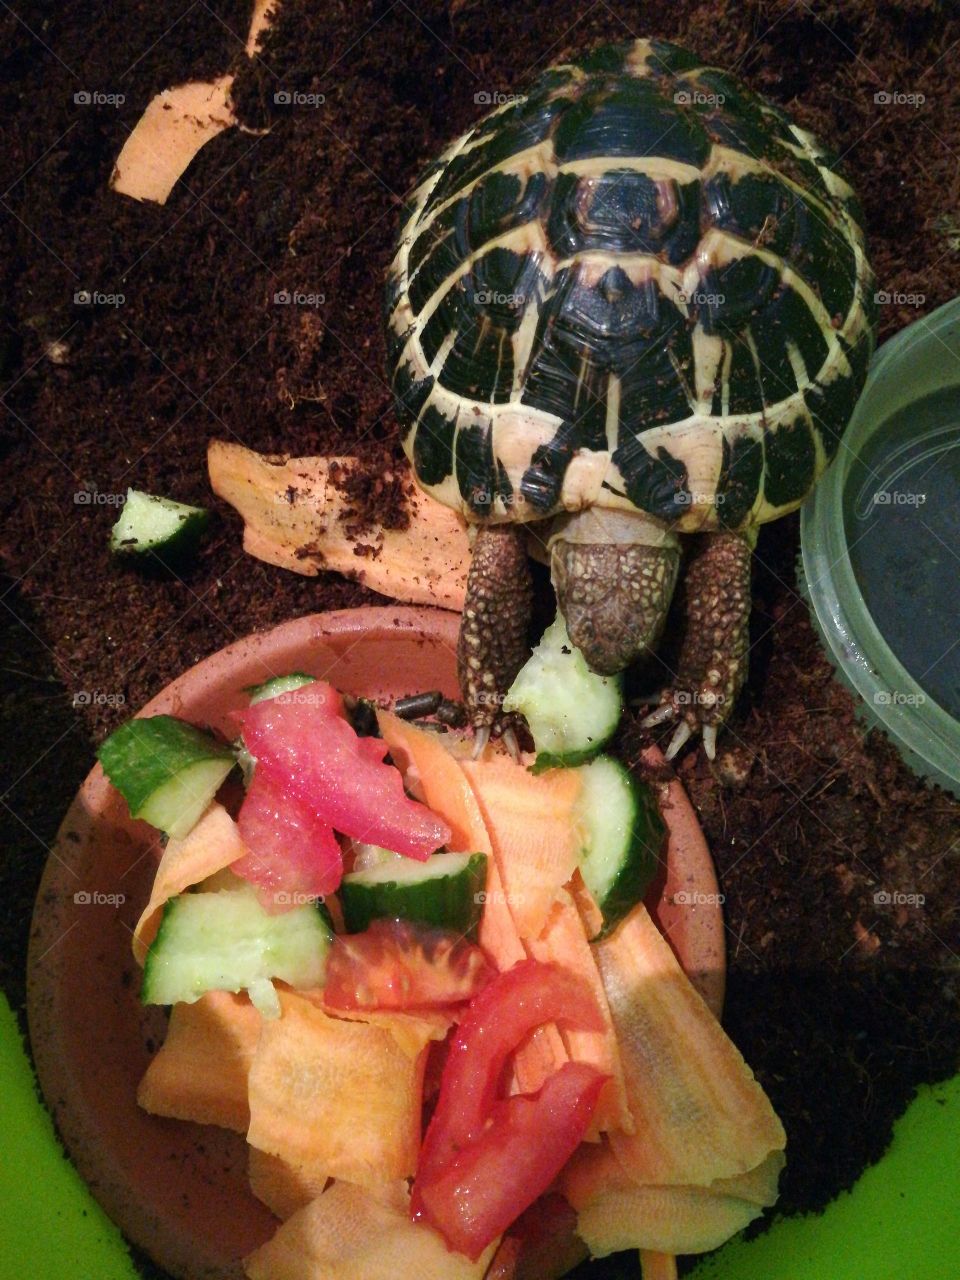 Brutus the turtle